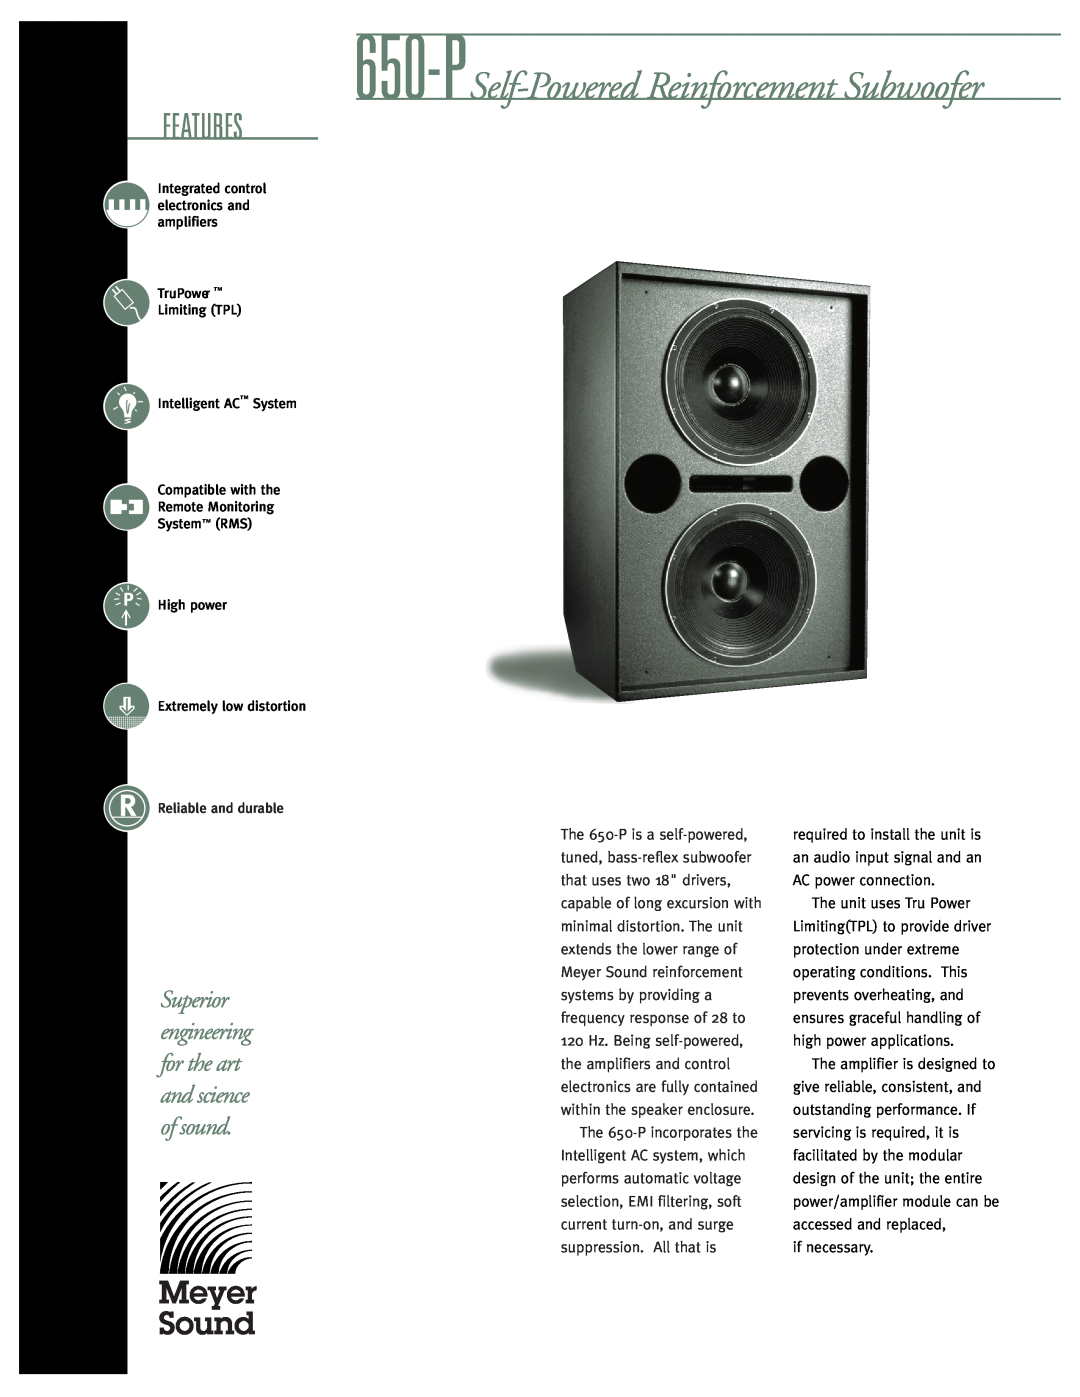 Meyer Sound 650-P manual Features, Meyer Sound, PSelf-PoweredReinforcement Subwoofer, if necessary 